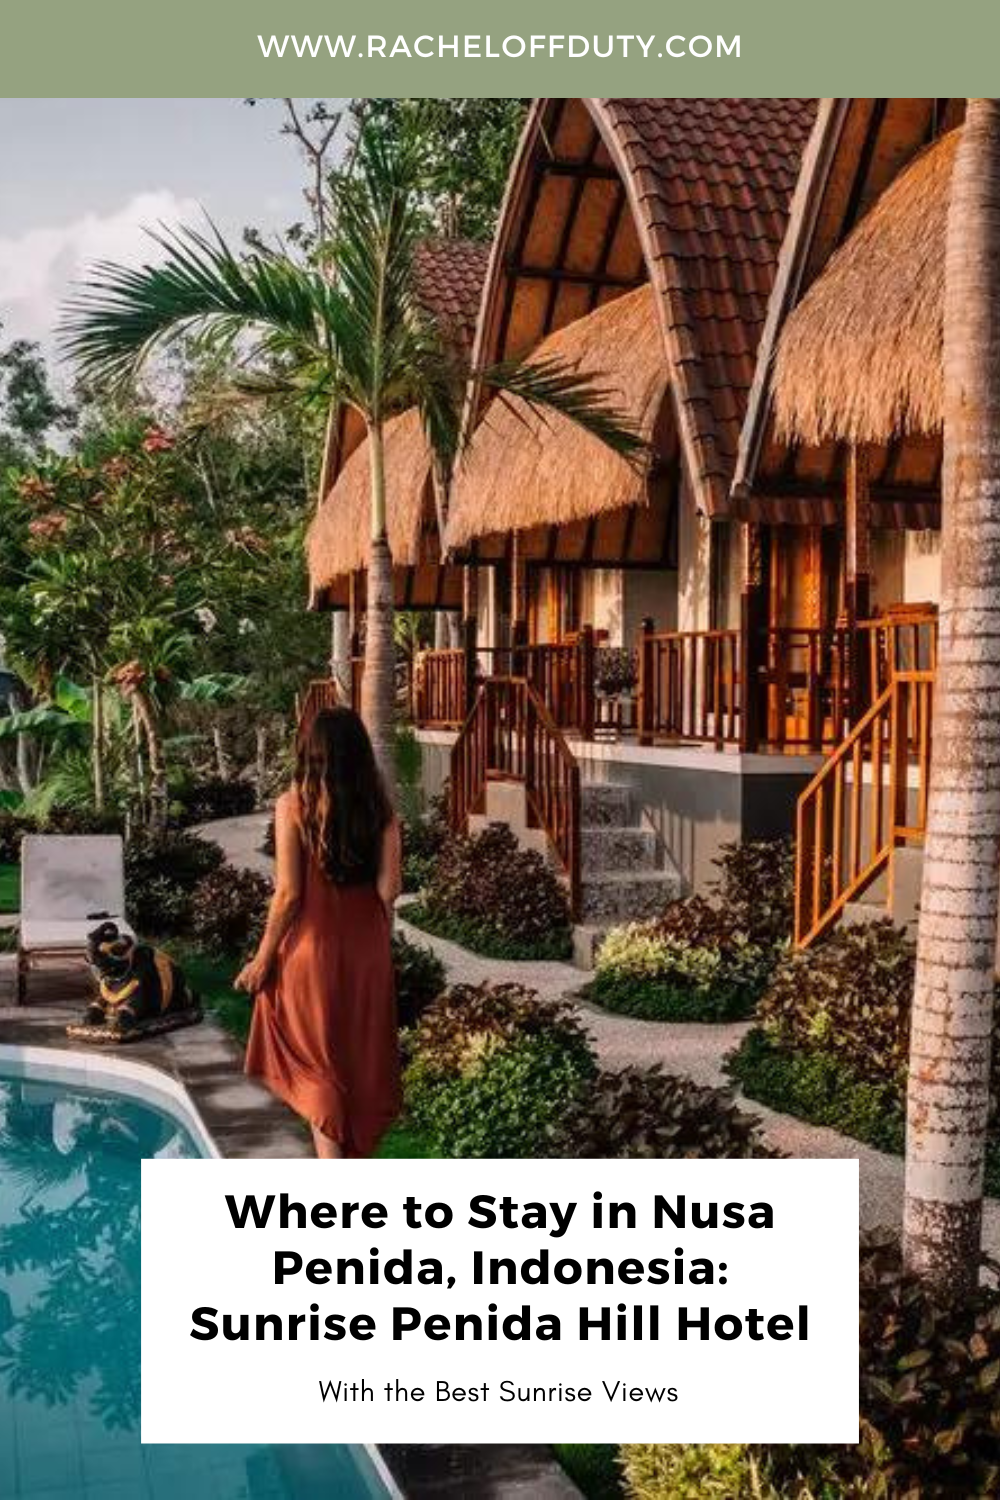 Rachel Off Duty: Where to Stay in Nusa Penida – Sunrise Penida Hill Hotel